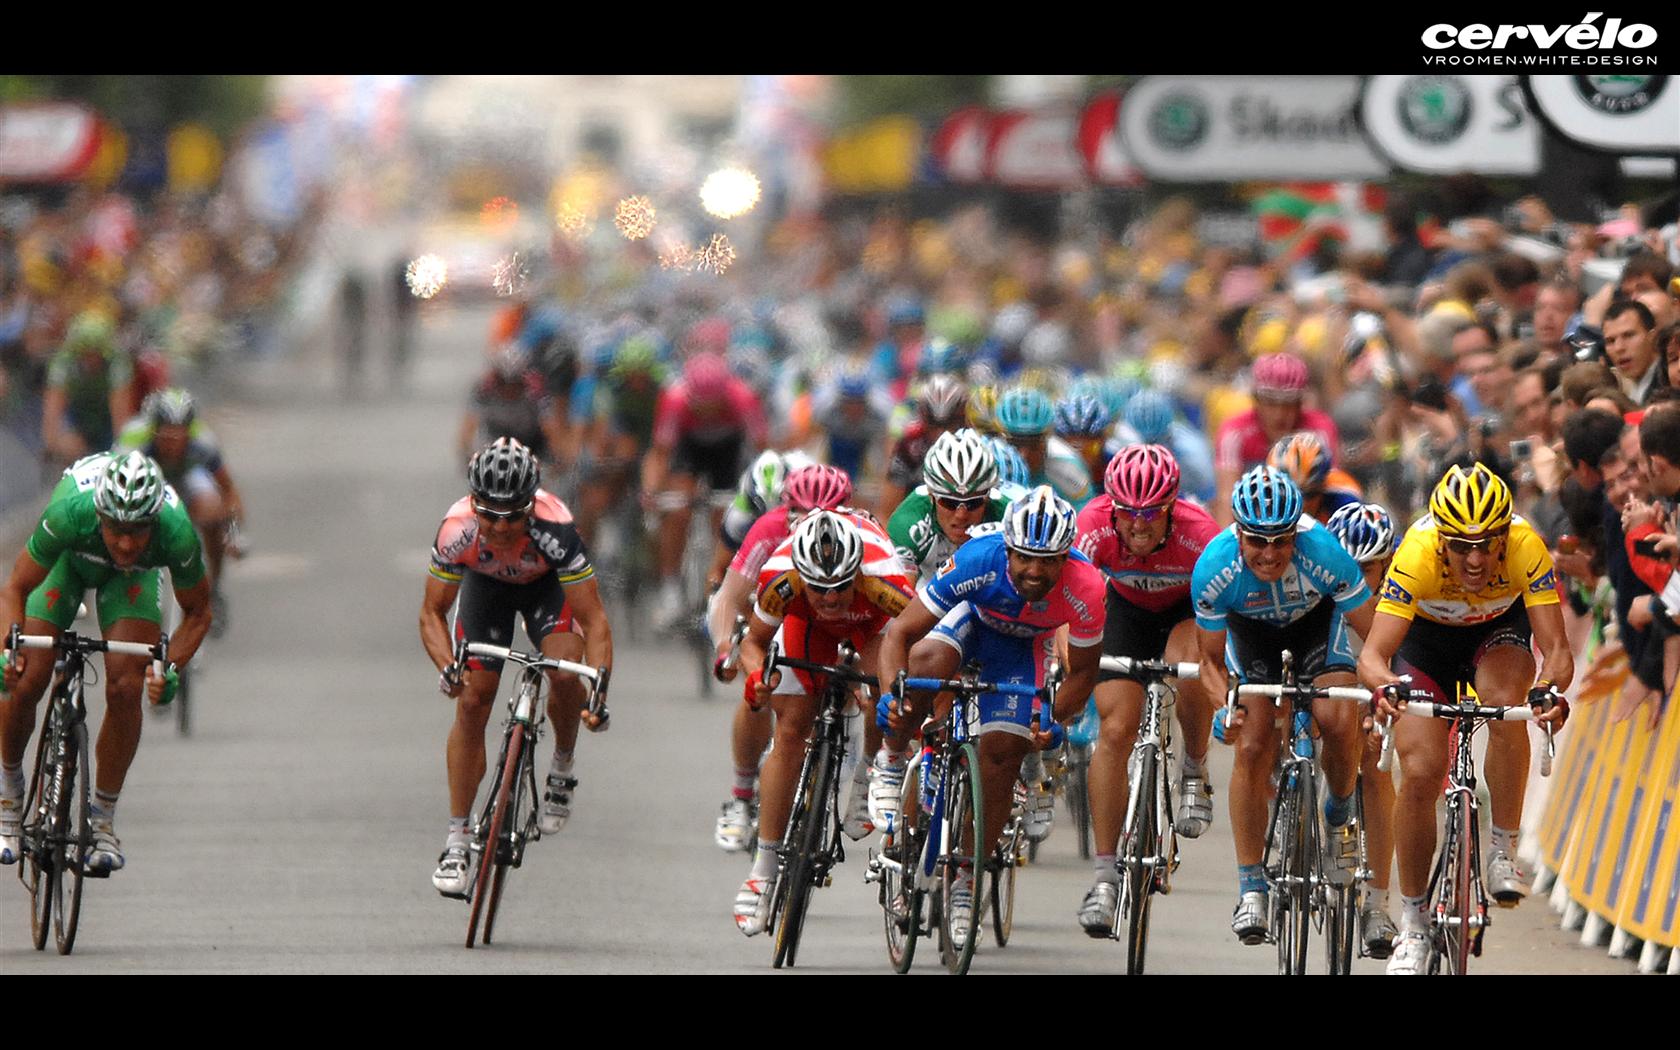 Free widescreen wallpaper, Tour de France